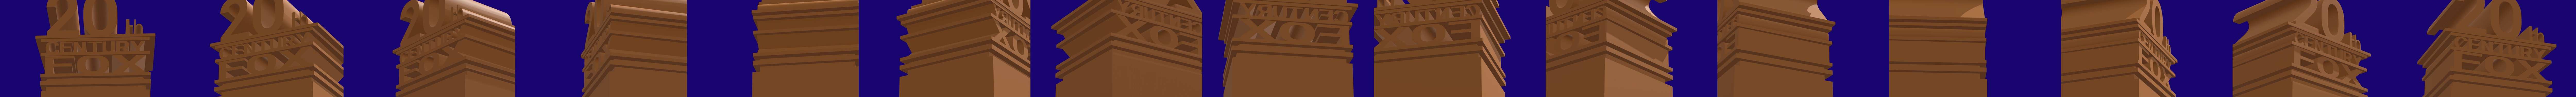 20th Century Fox Logo Customizable Twentieth Century Toy 